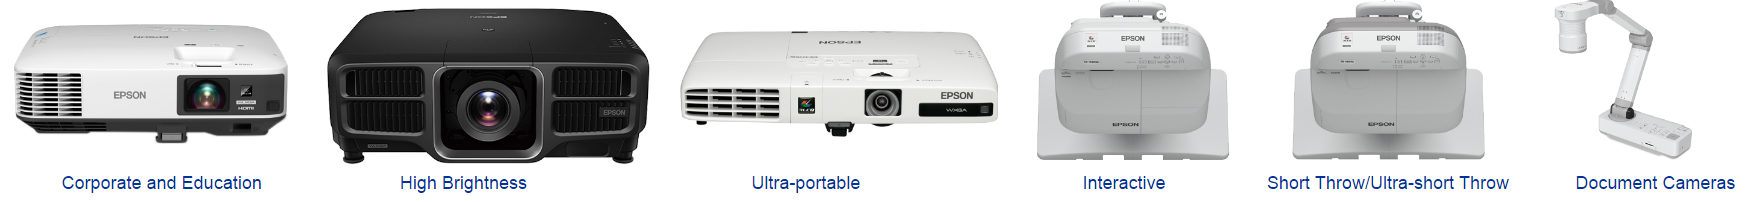 epson projectors